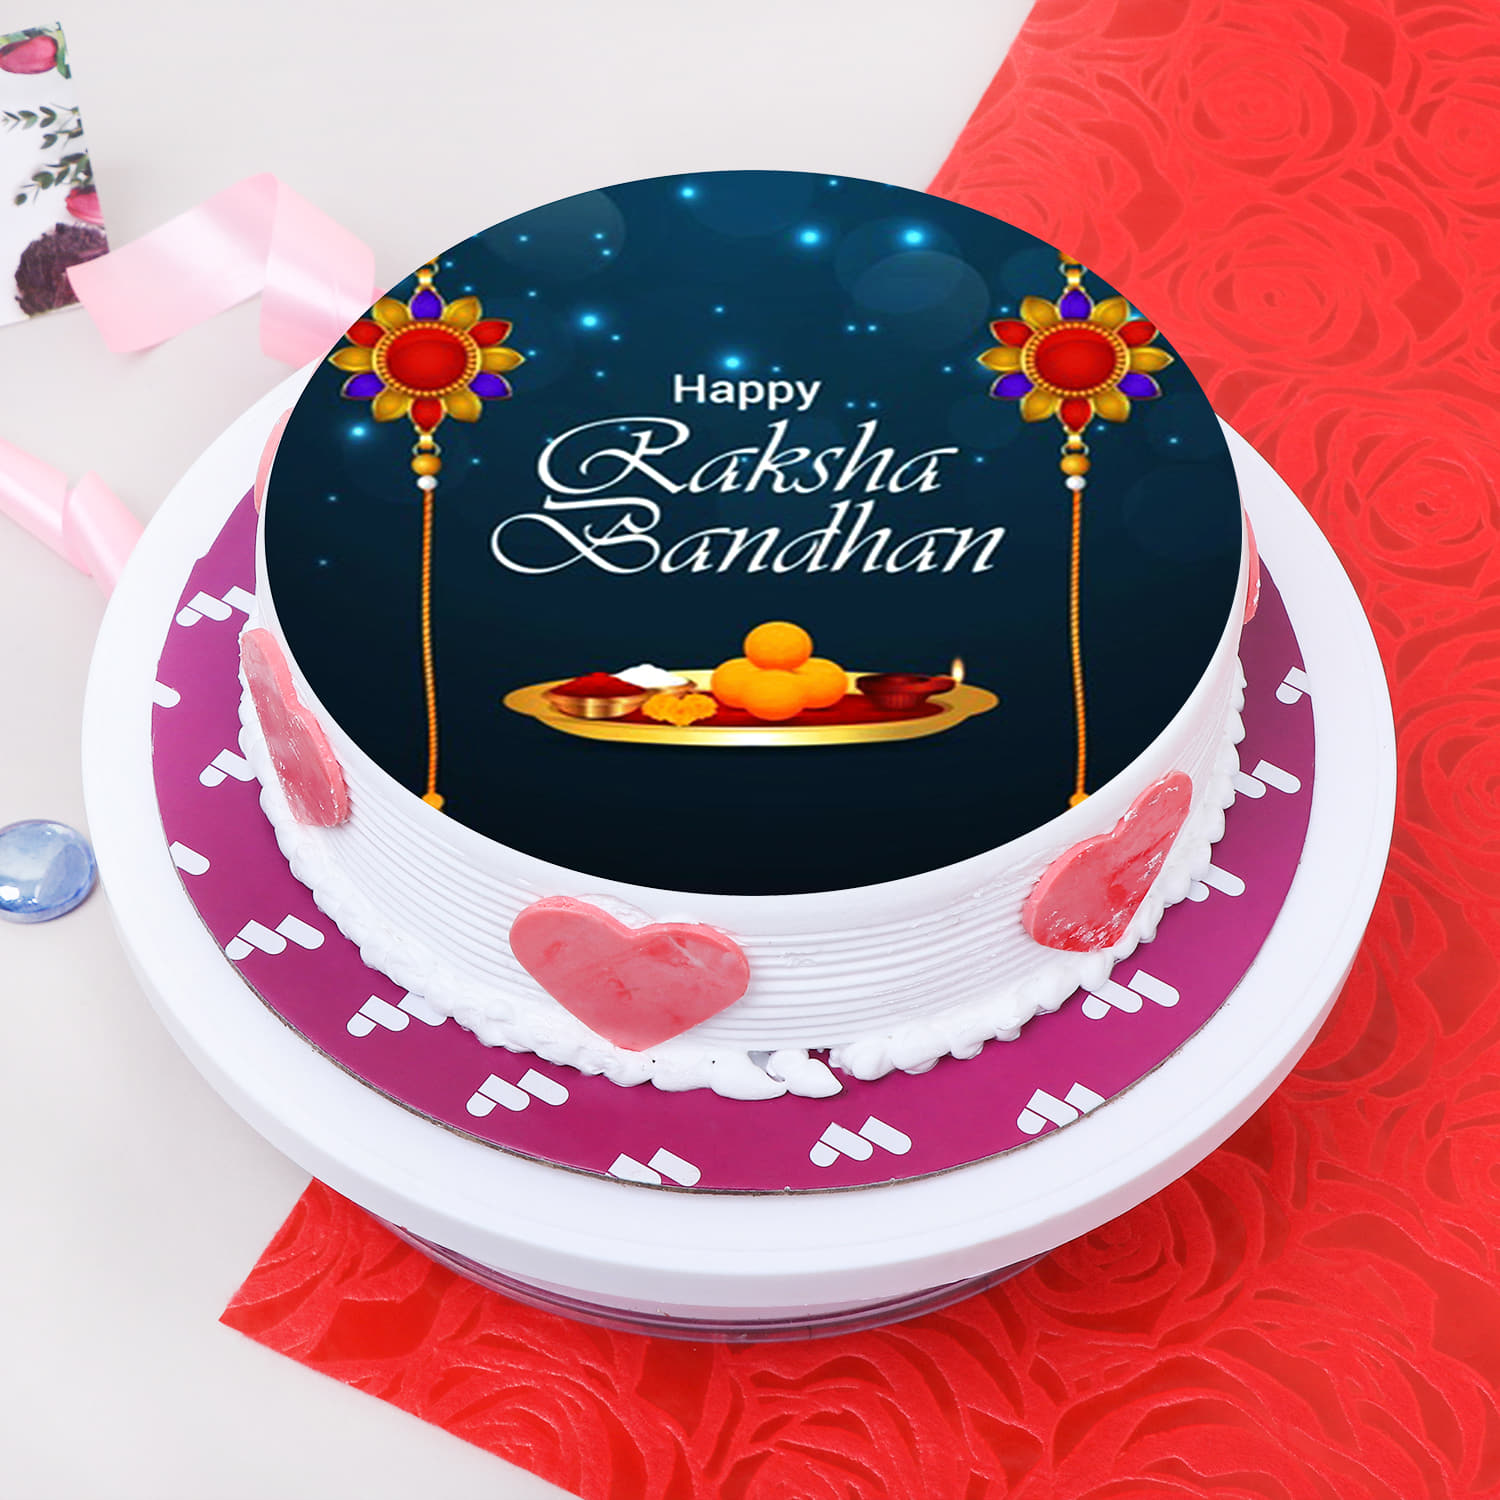 Hyderabad Cupcakes - Custom Designer Fondant Cakes, Cupcakes, Cake Pops,  Wedding Cakes & more!: August 2015